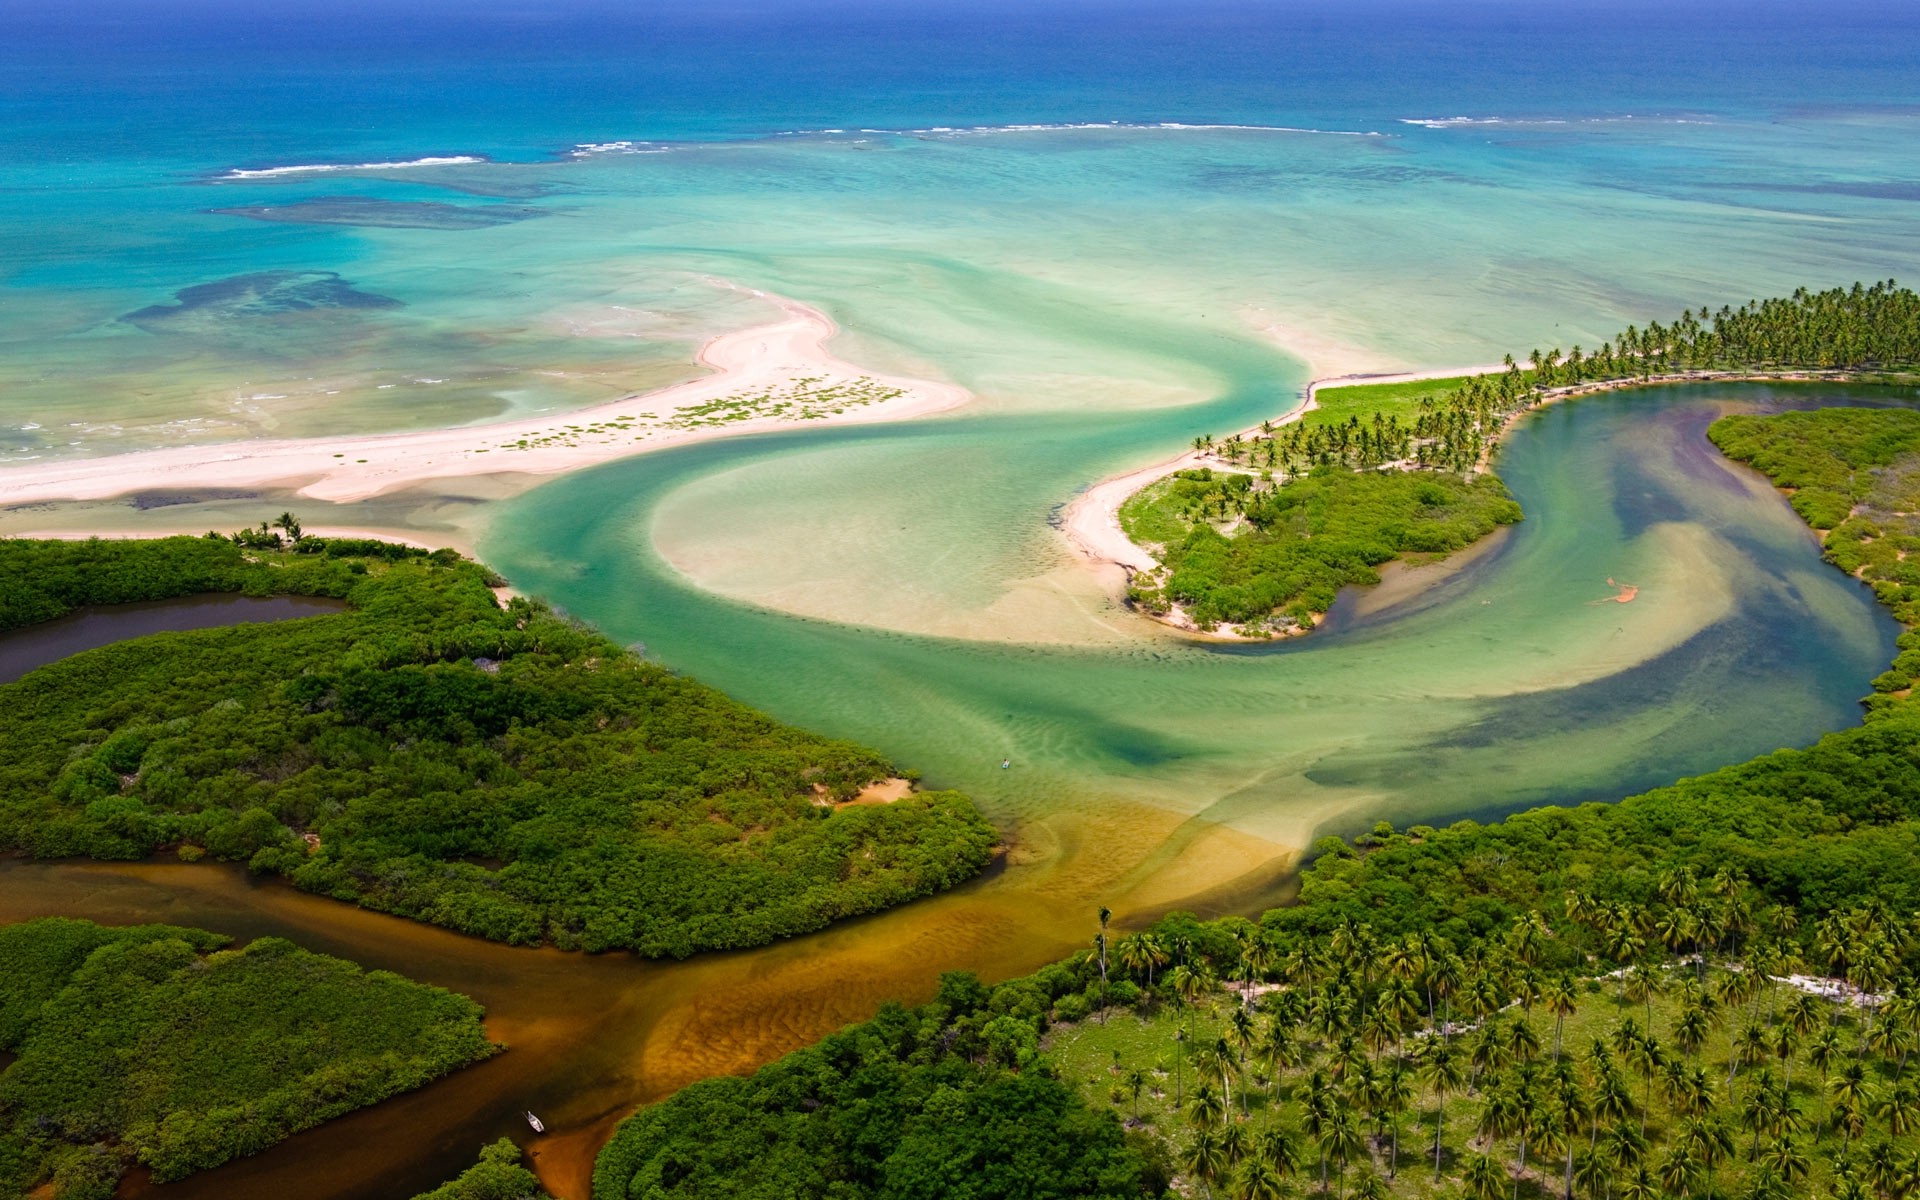 forest, River, Jungles, Brazil, Aerial View, Estuaries, Beach, Sea